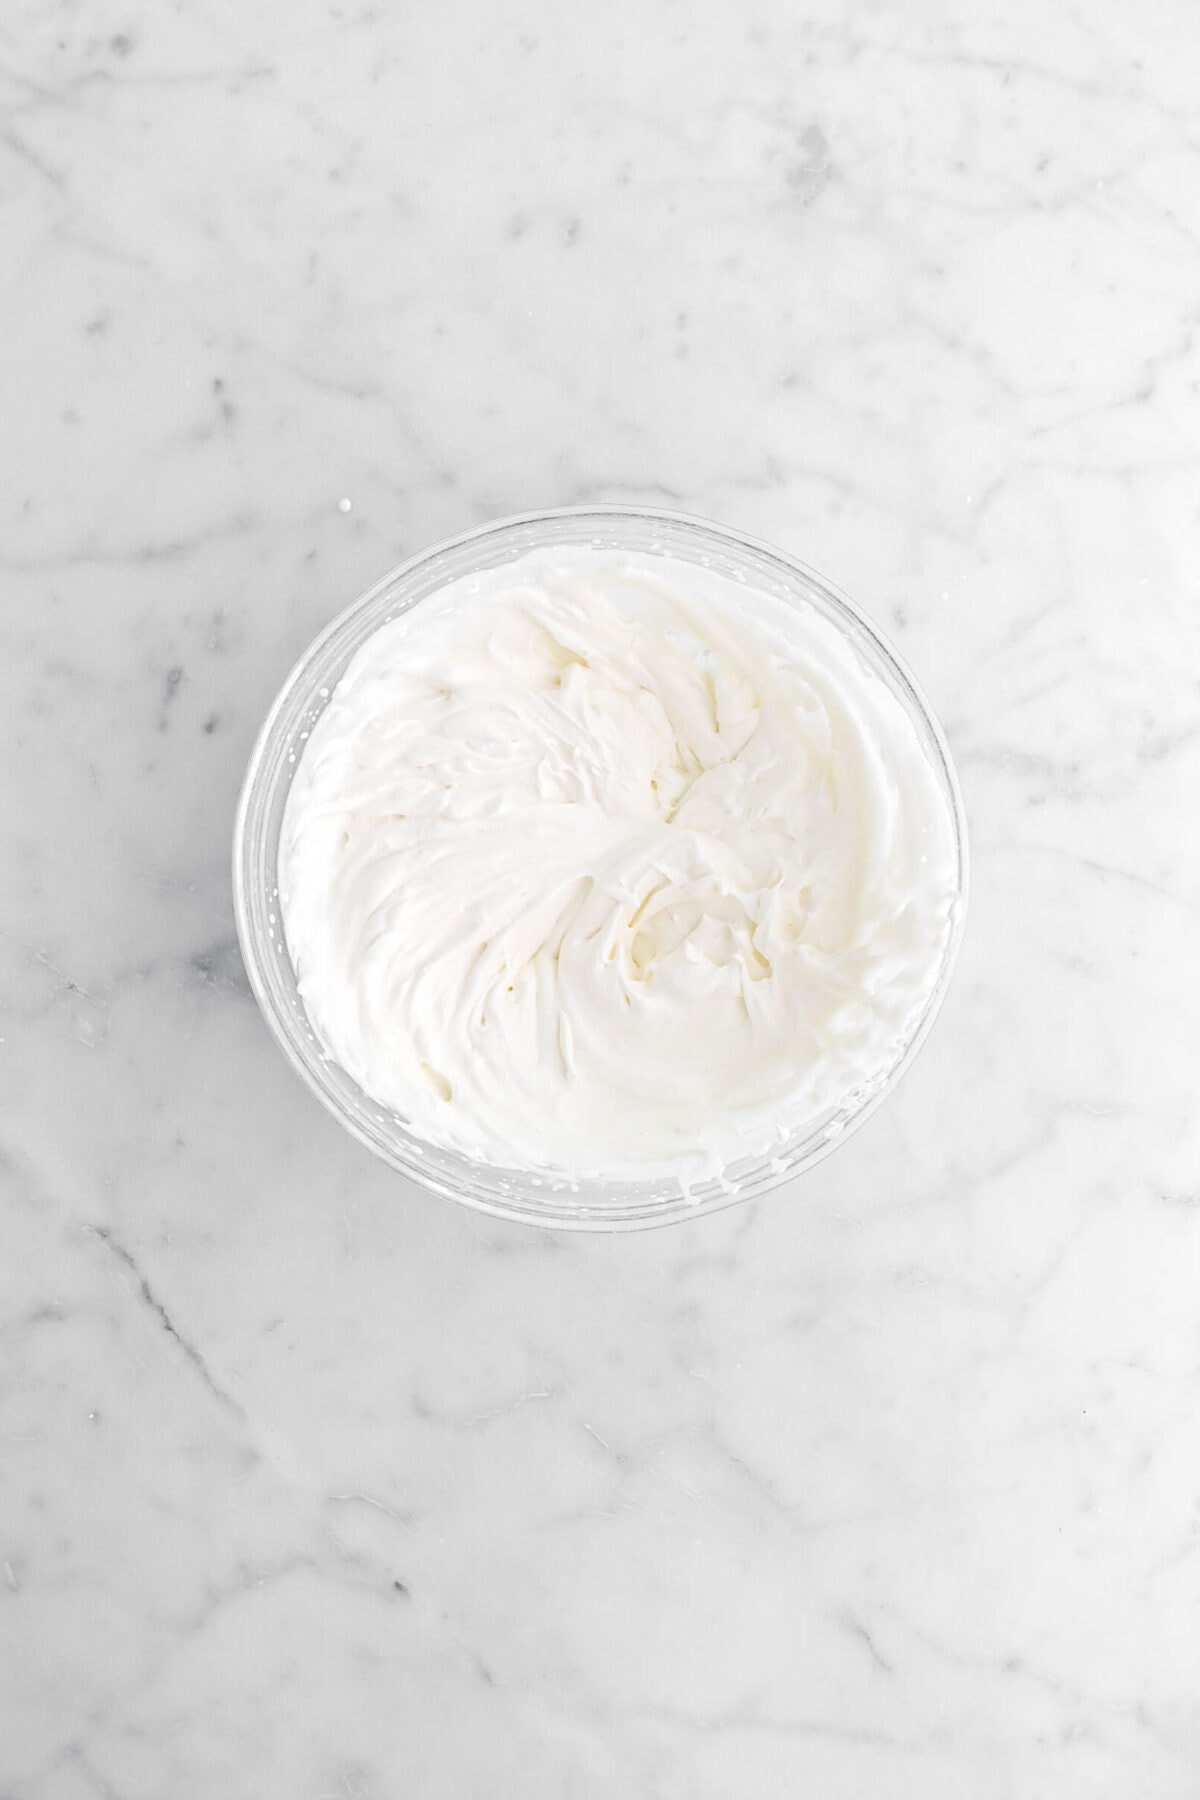 mascarpone whipped cream in glass bowl.